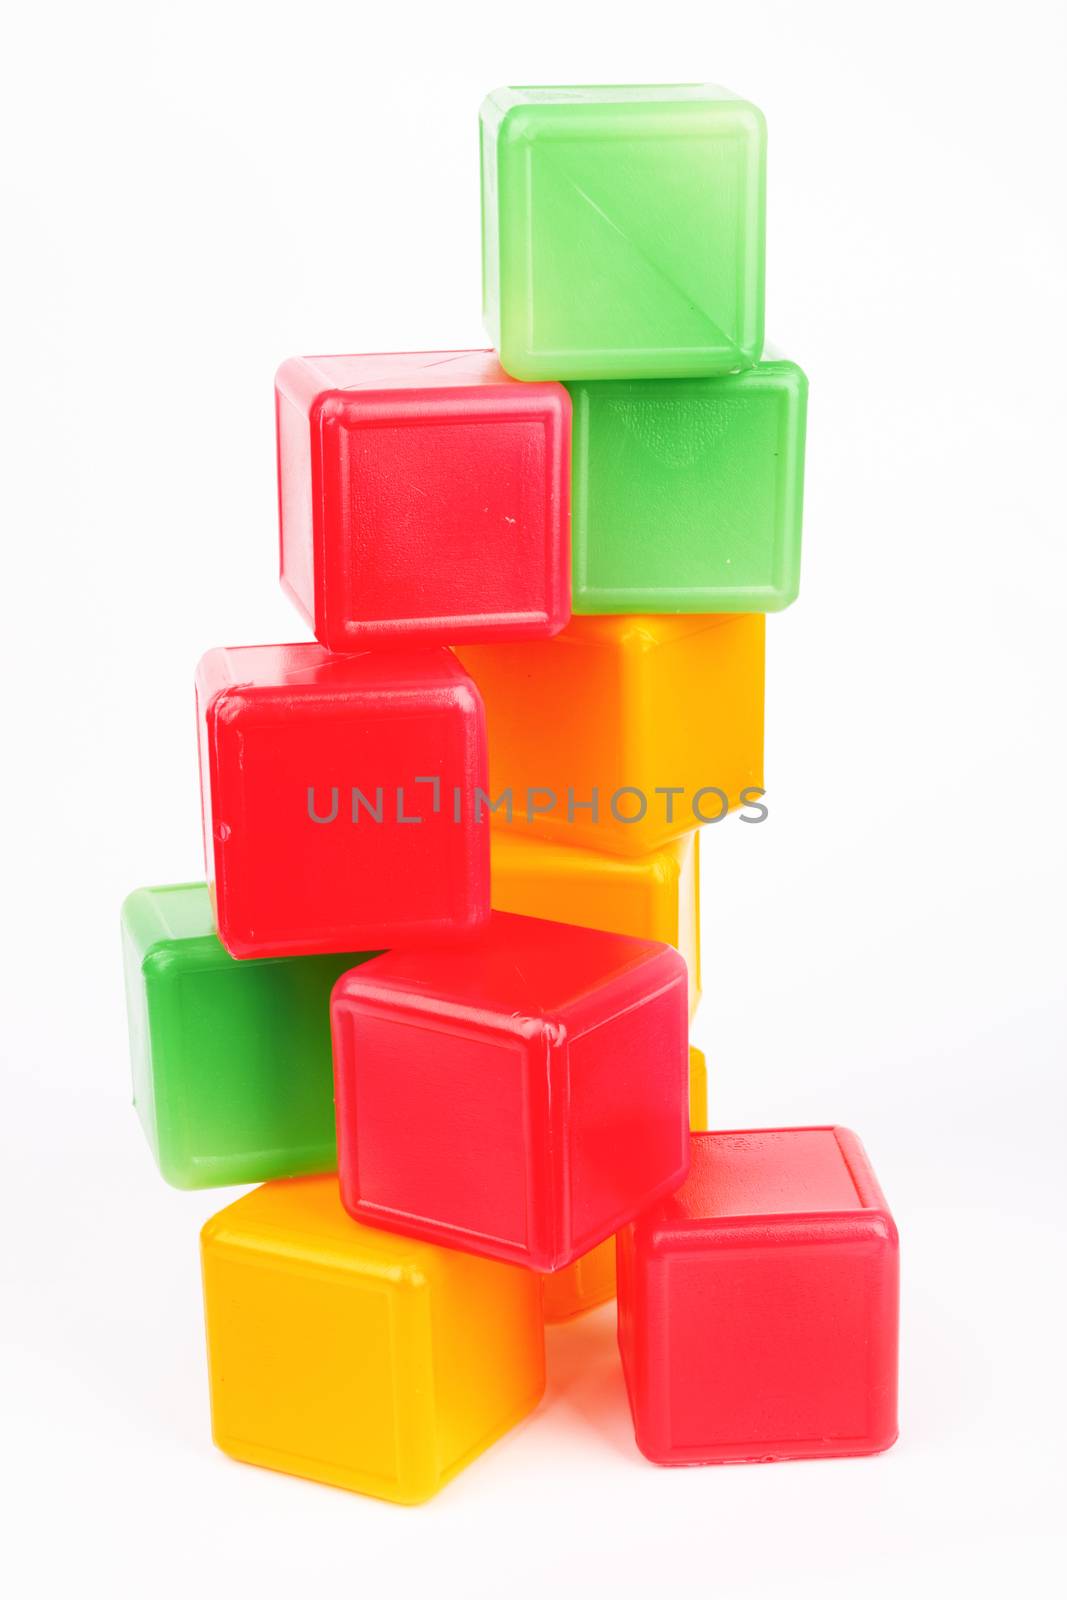 cubes by pioneer111